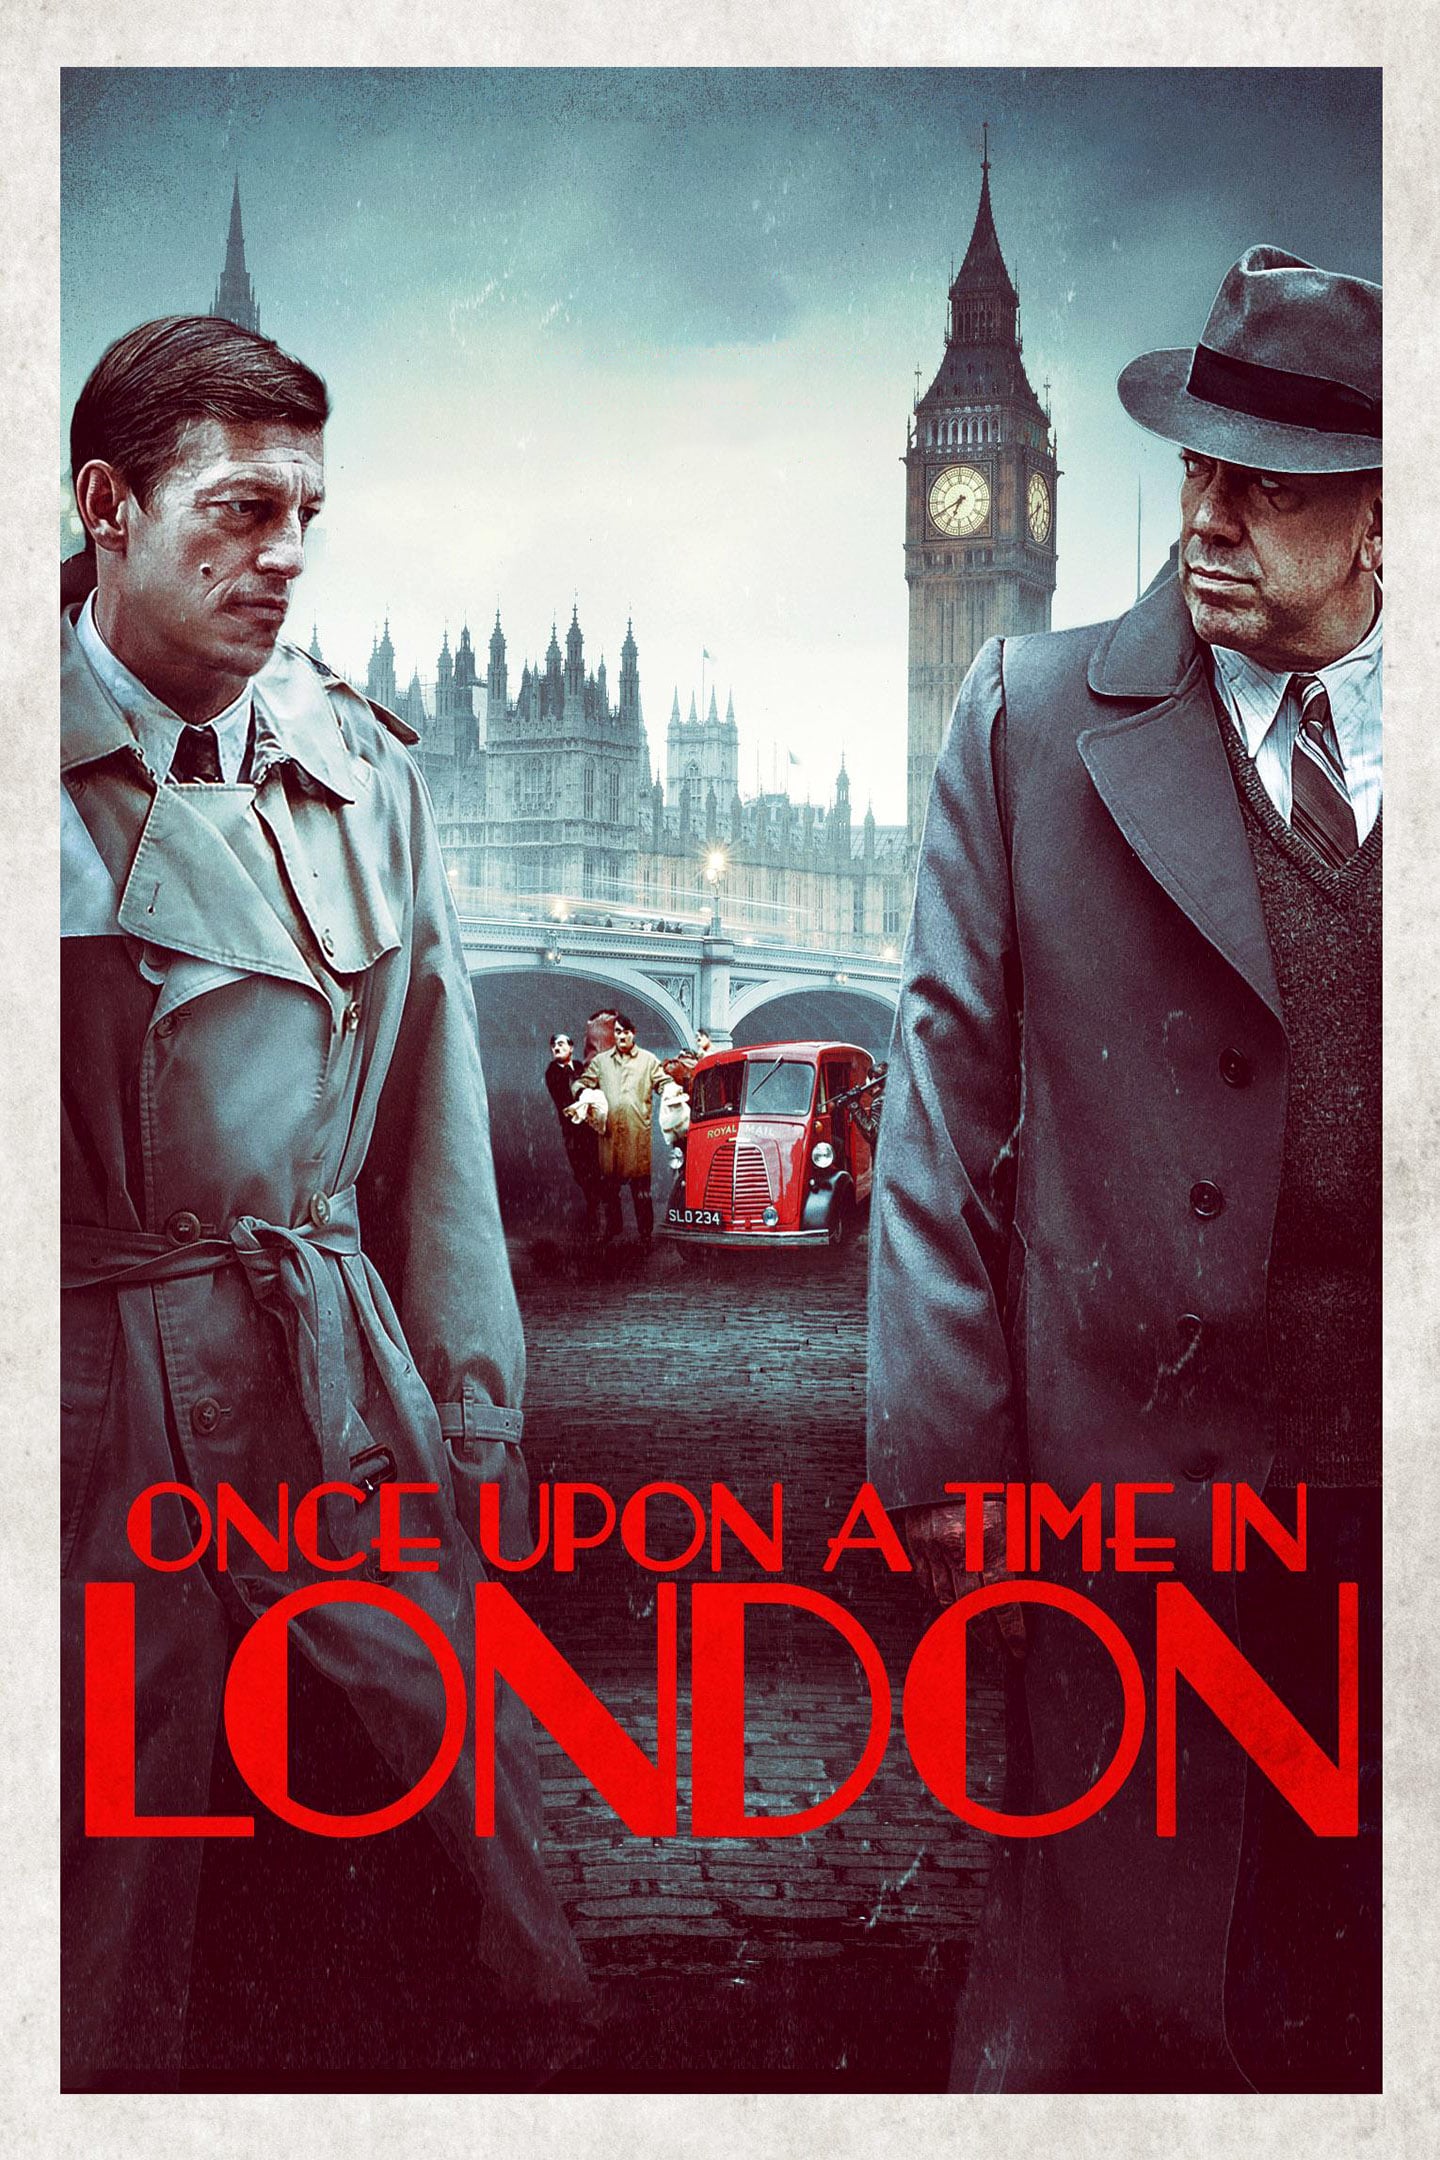 Poster de la película "Once Upon a Time in London"